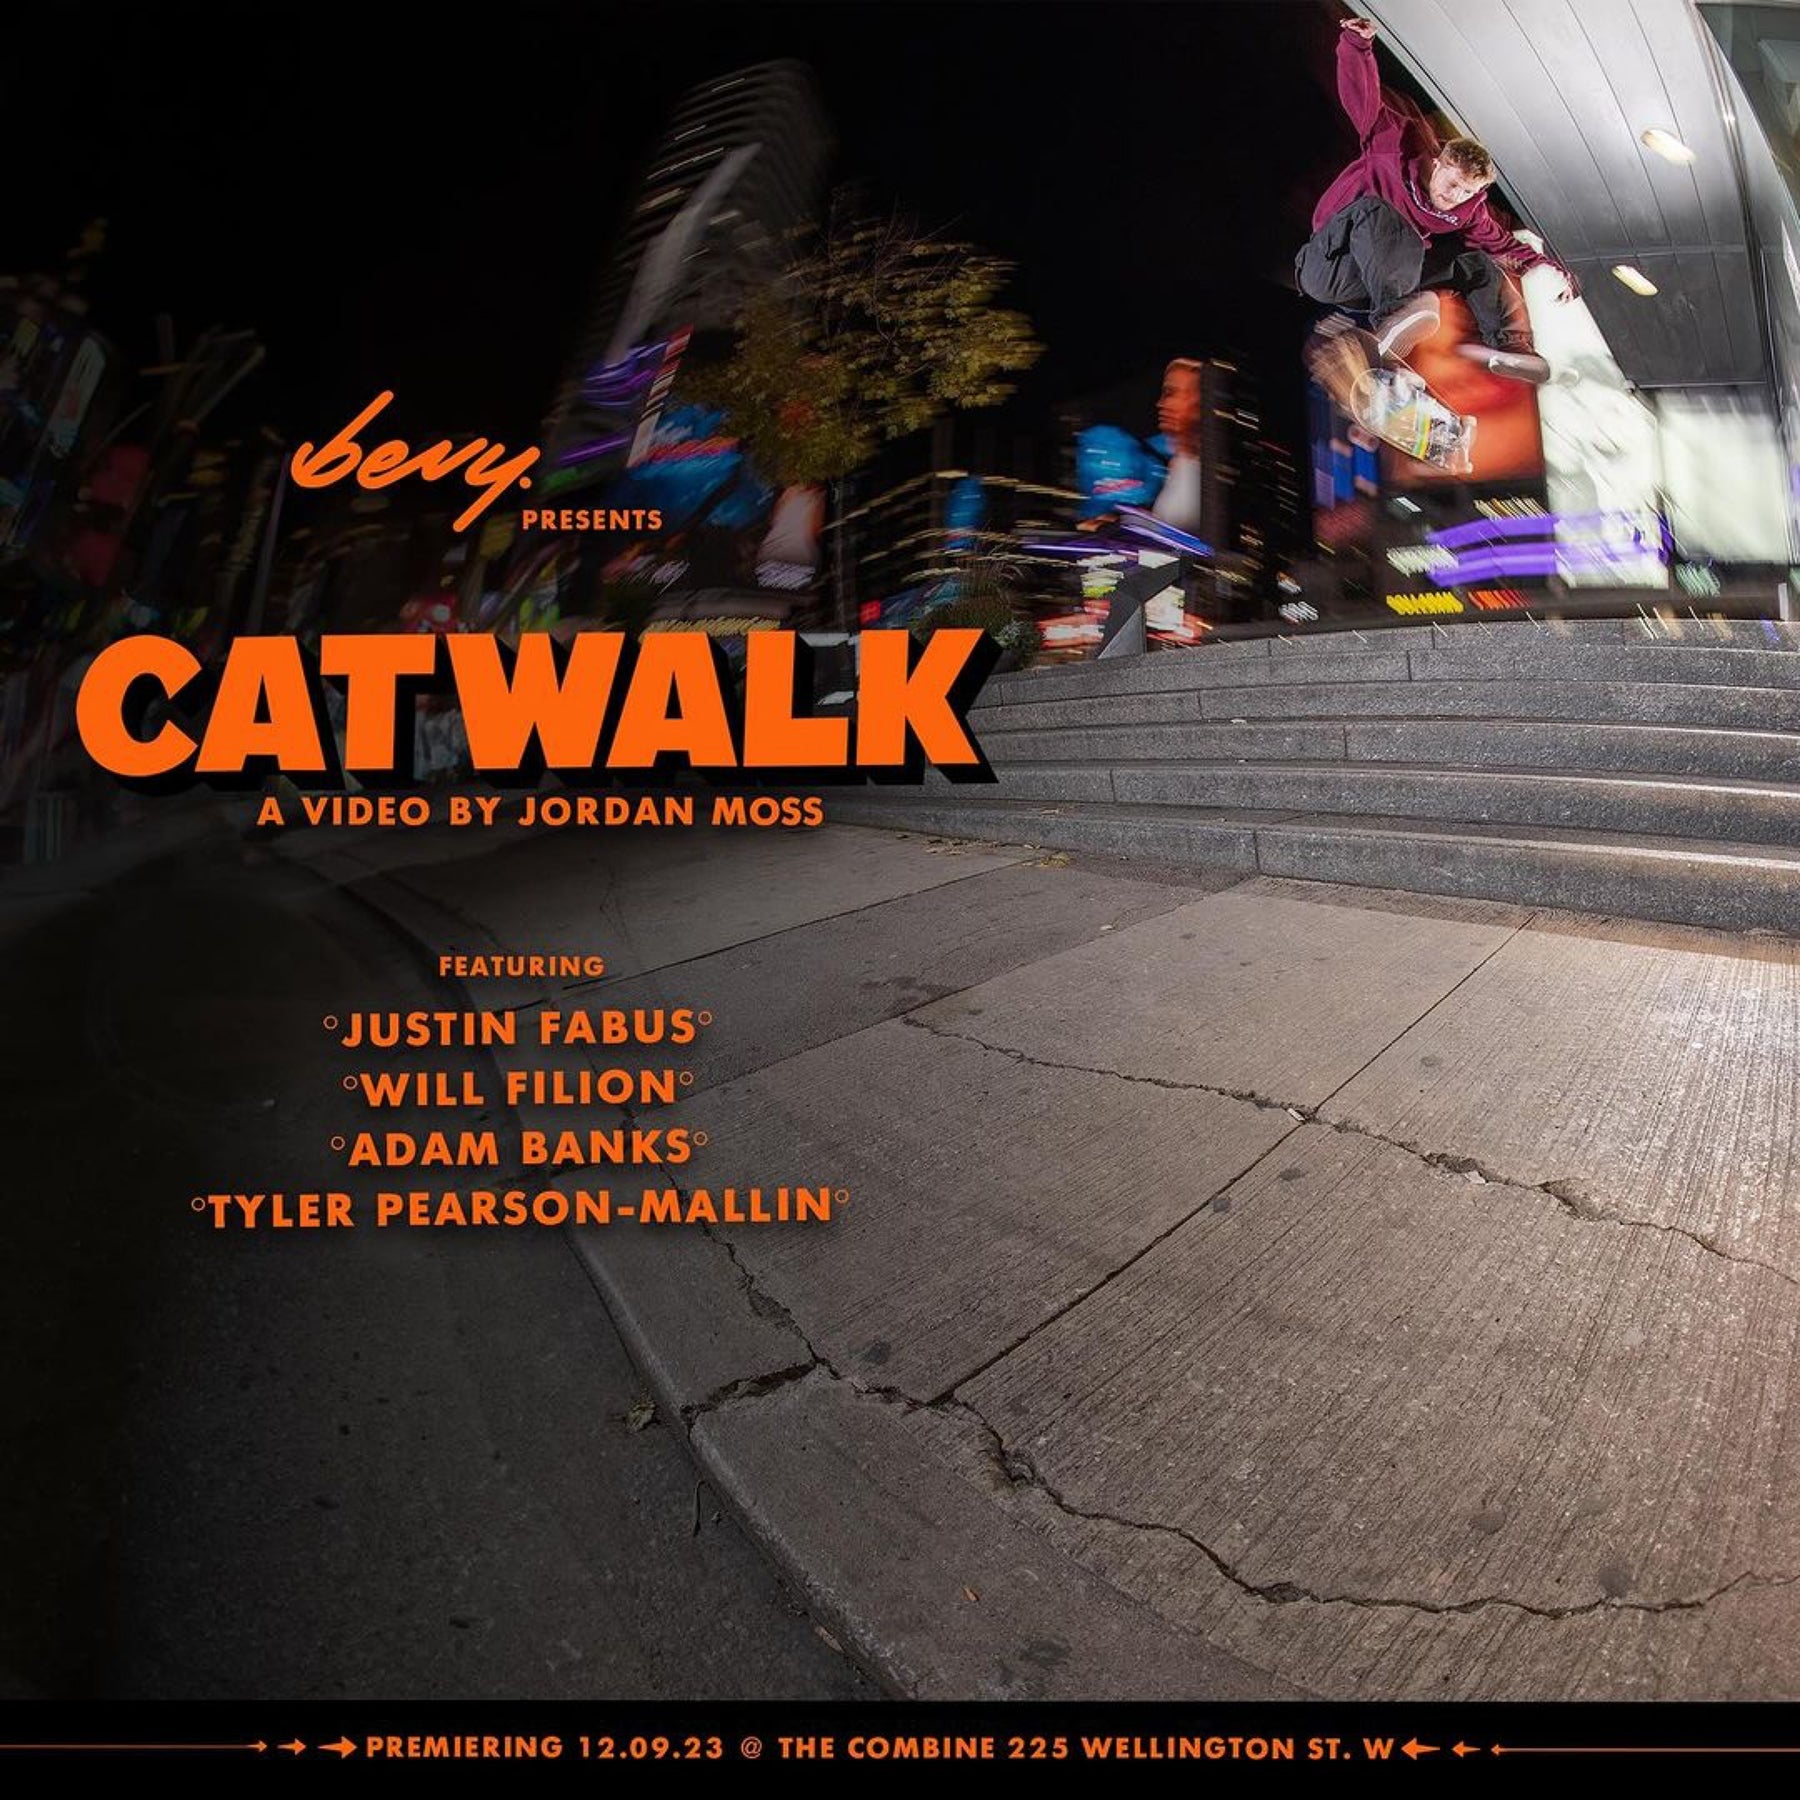 Catwalk video premiere 12/9